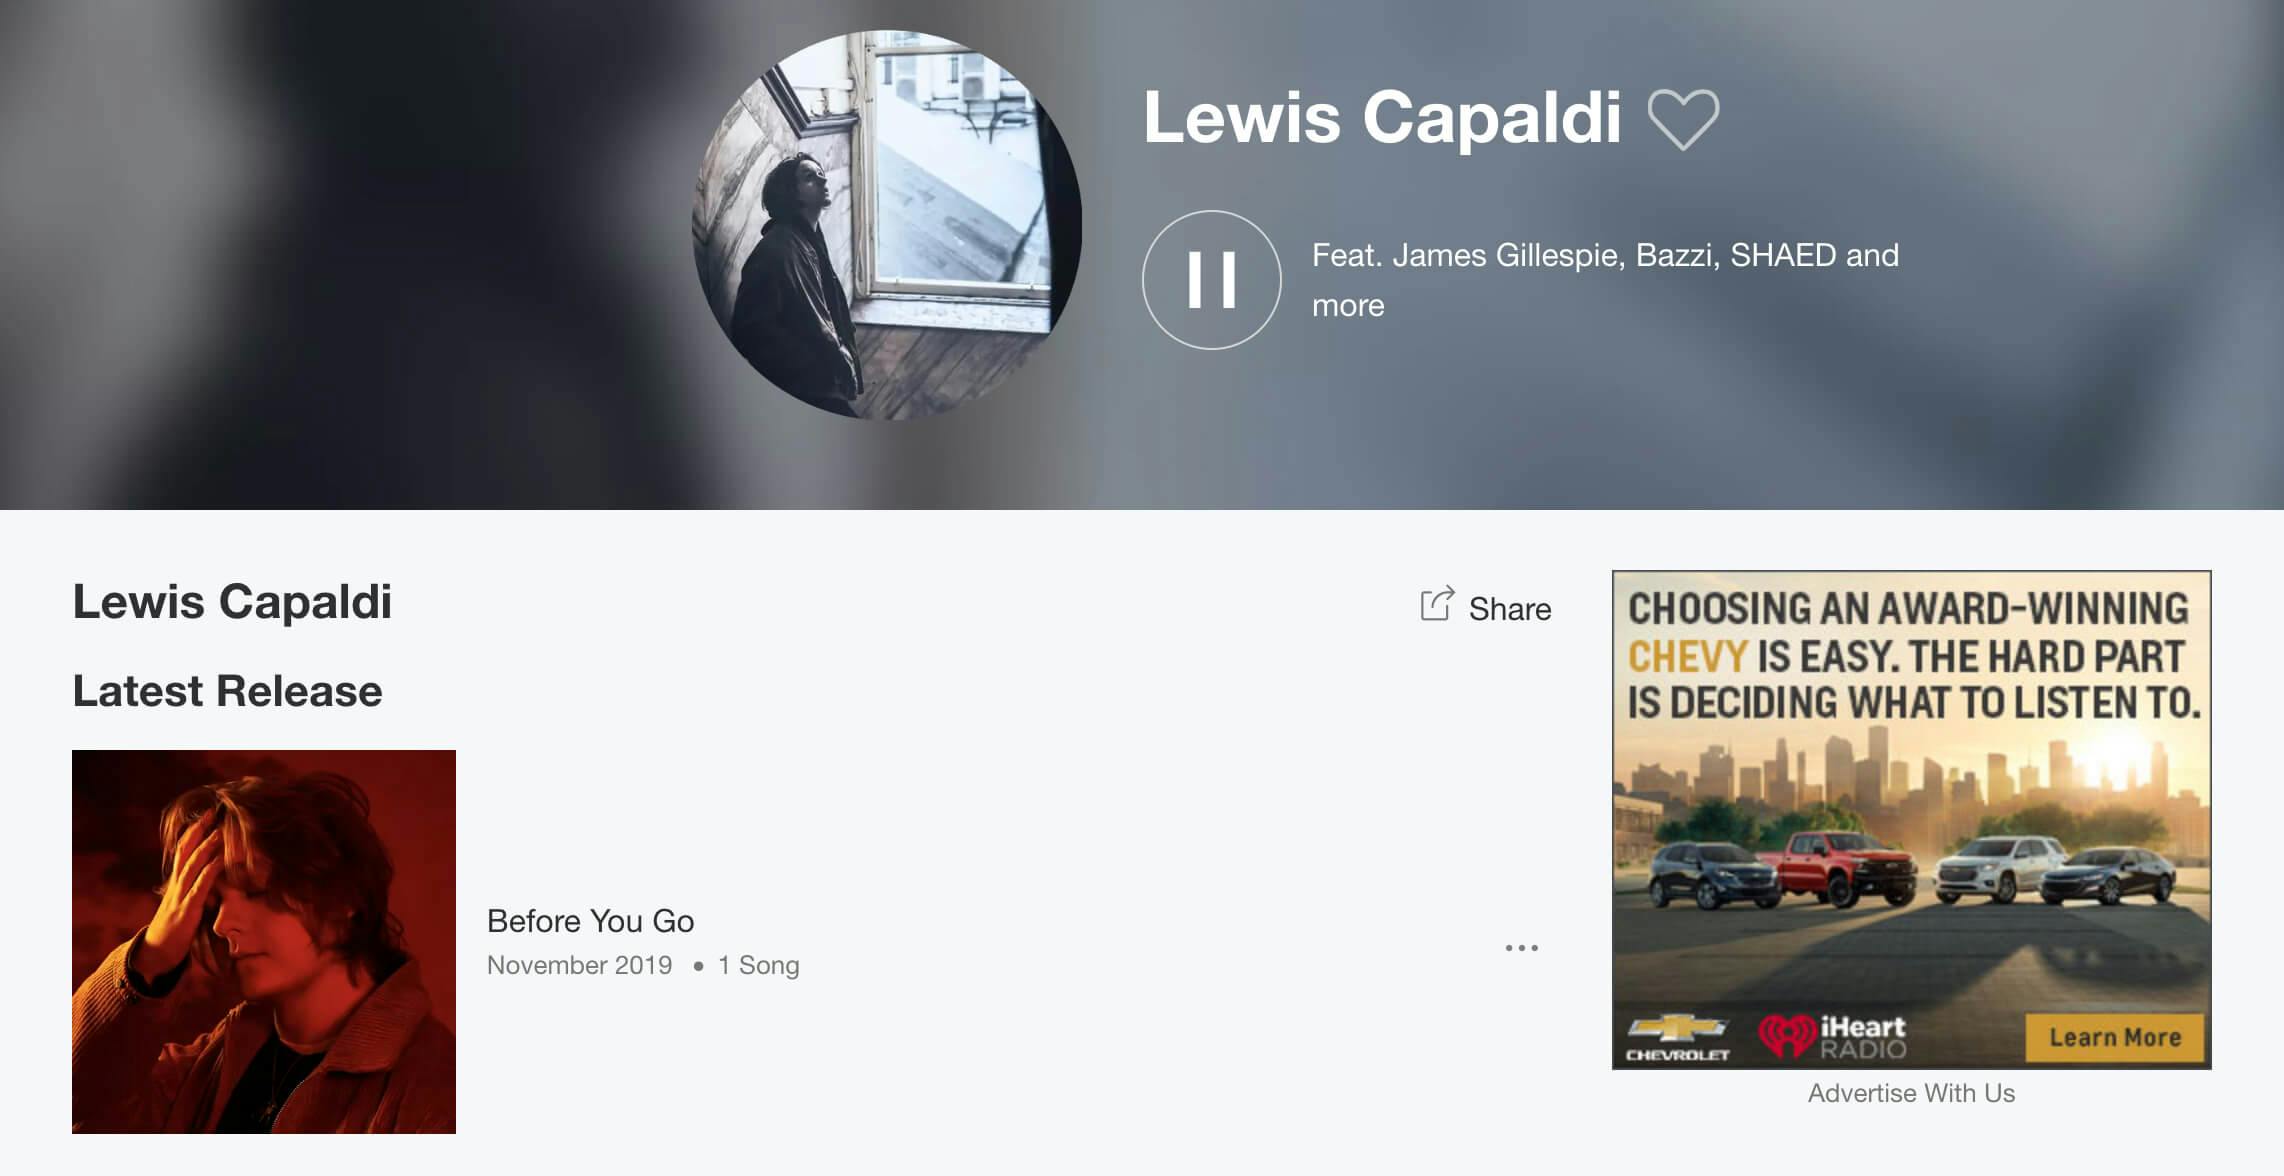 Lewis Capaldi - iHeartRadio